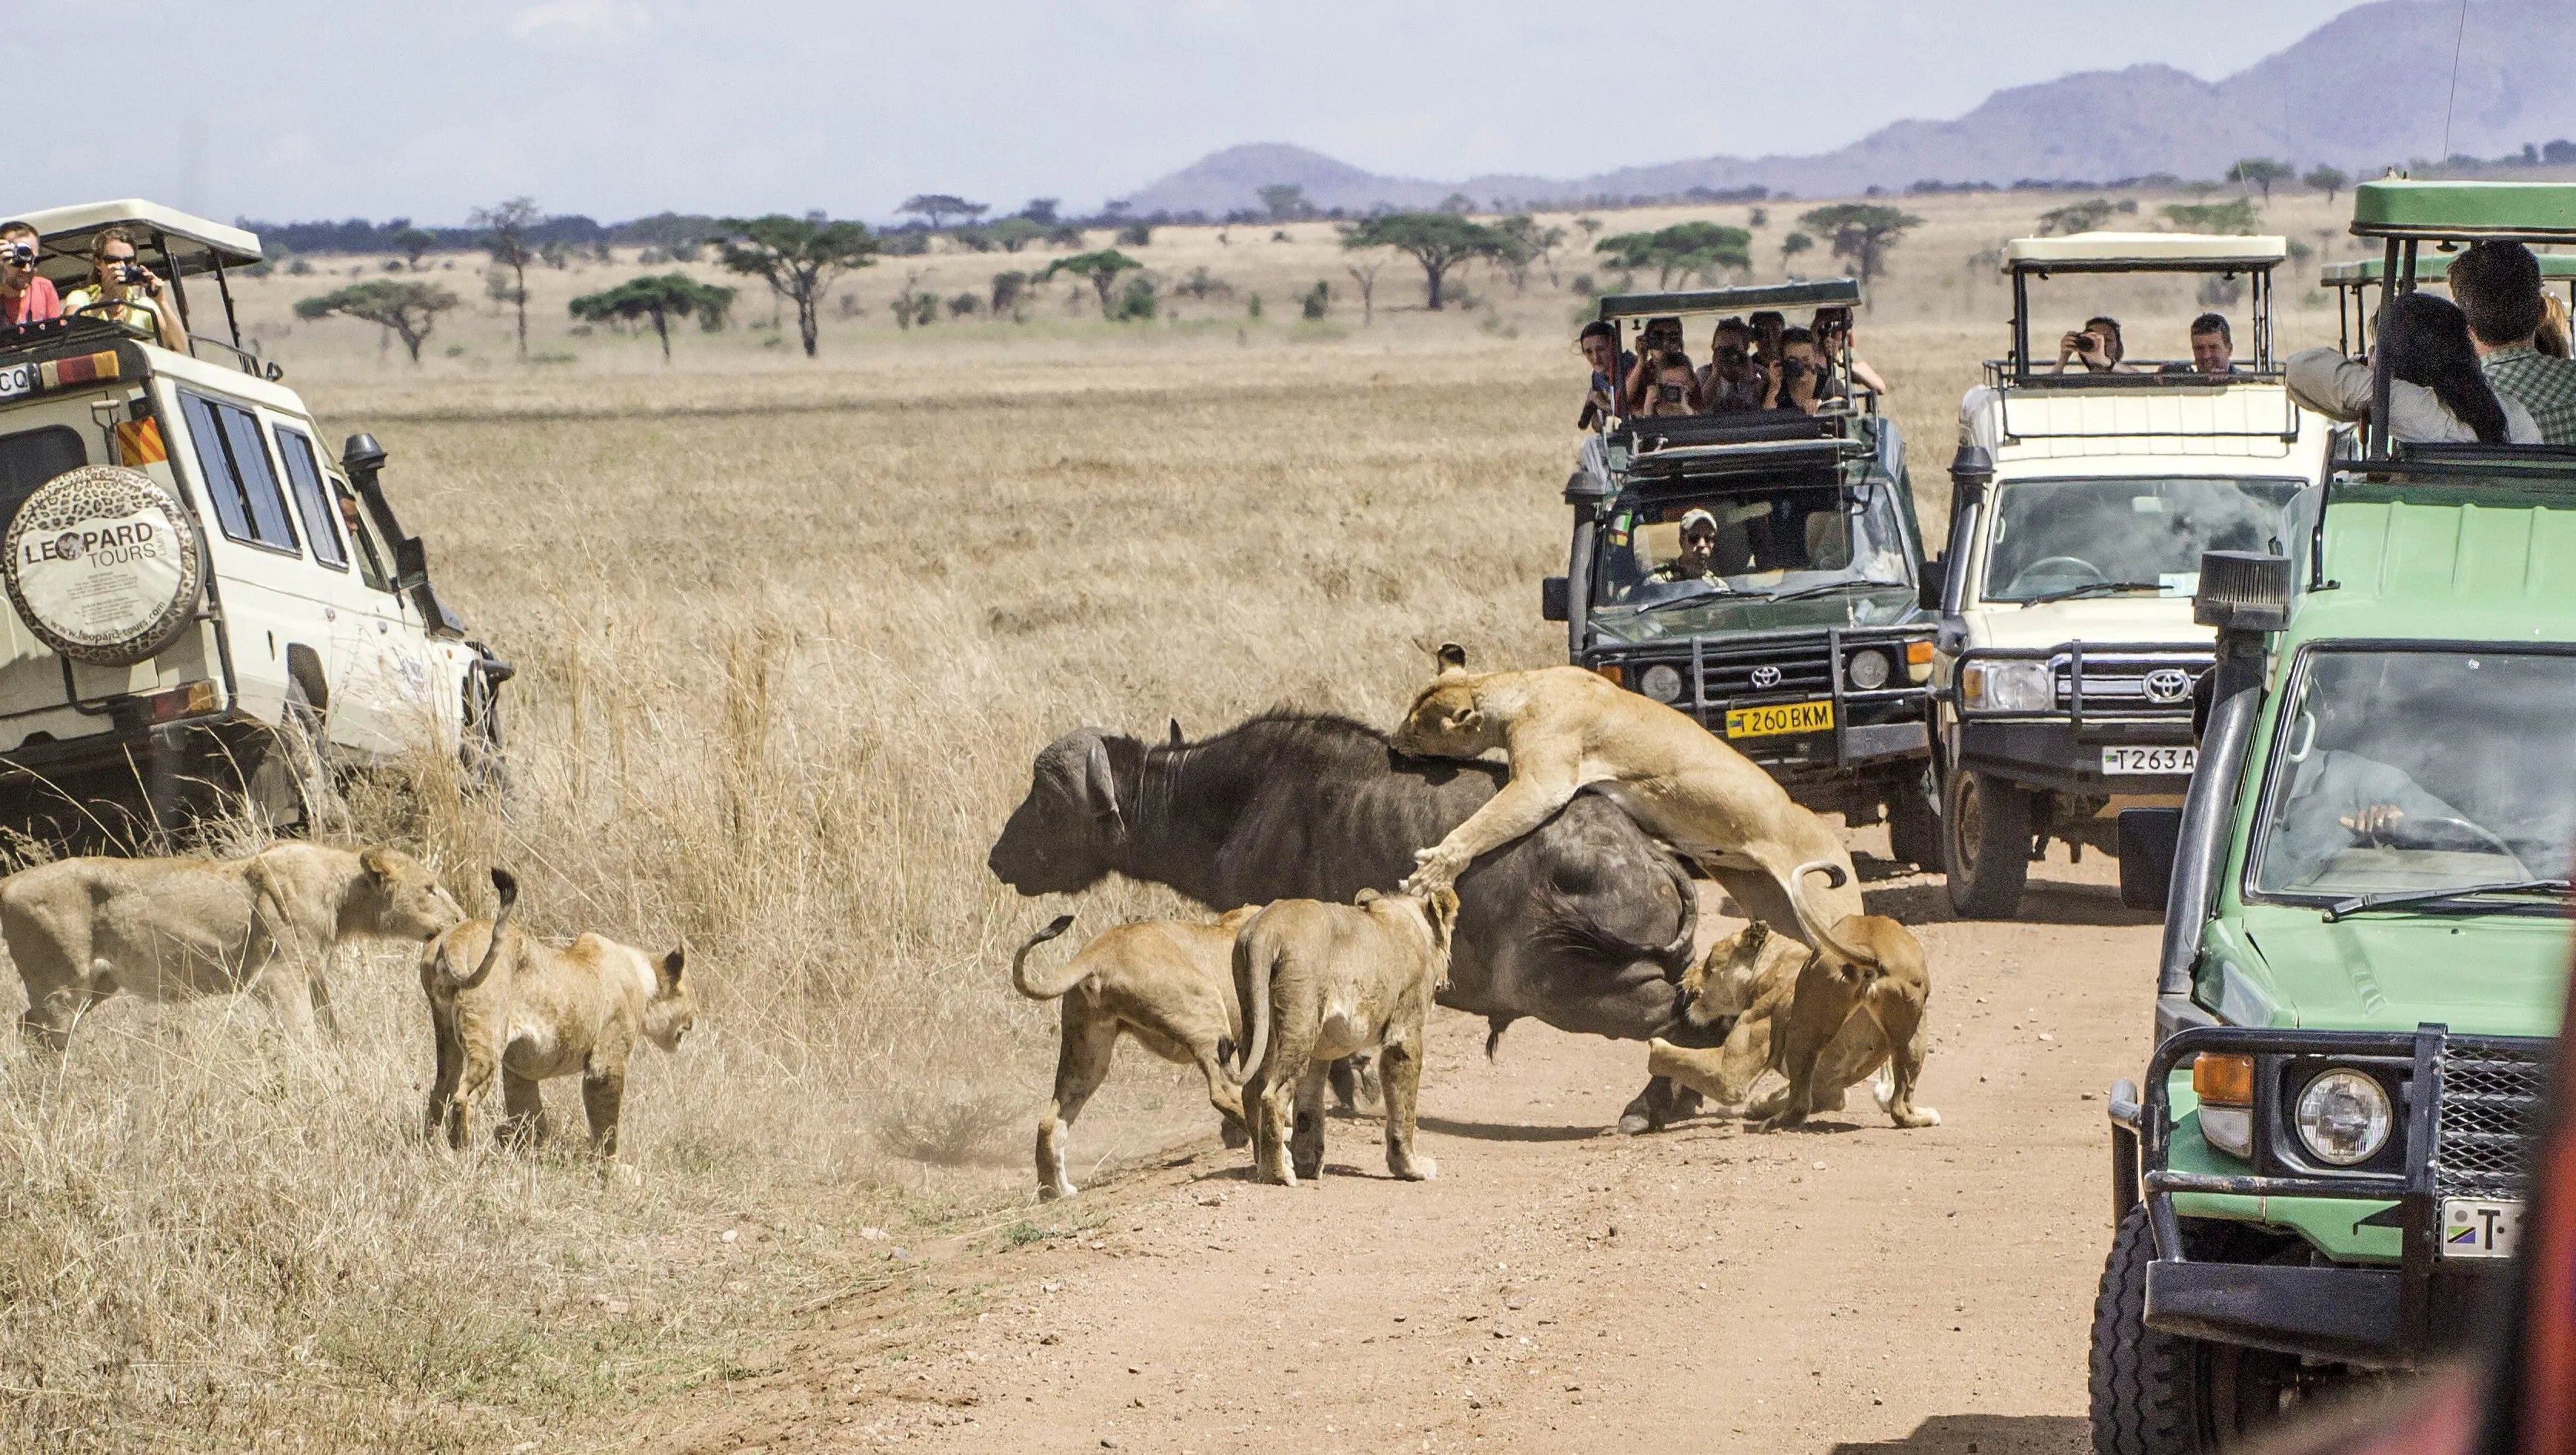 Lions attacking a buffalo in a safari